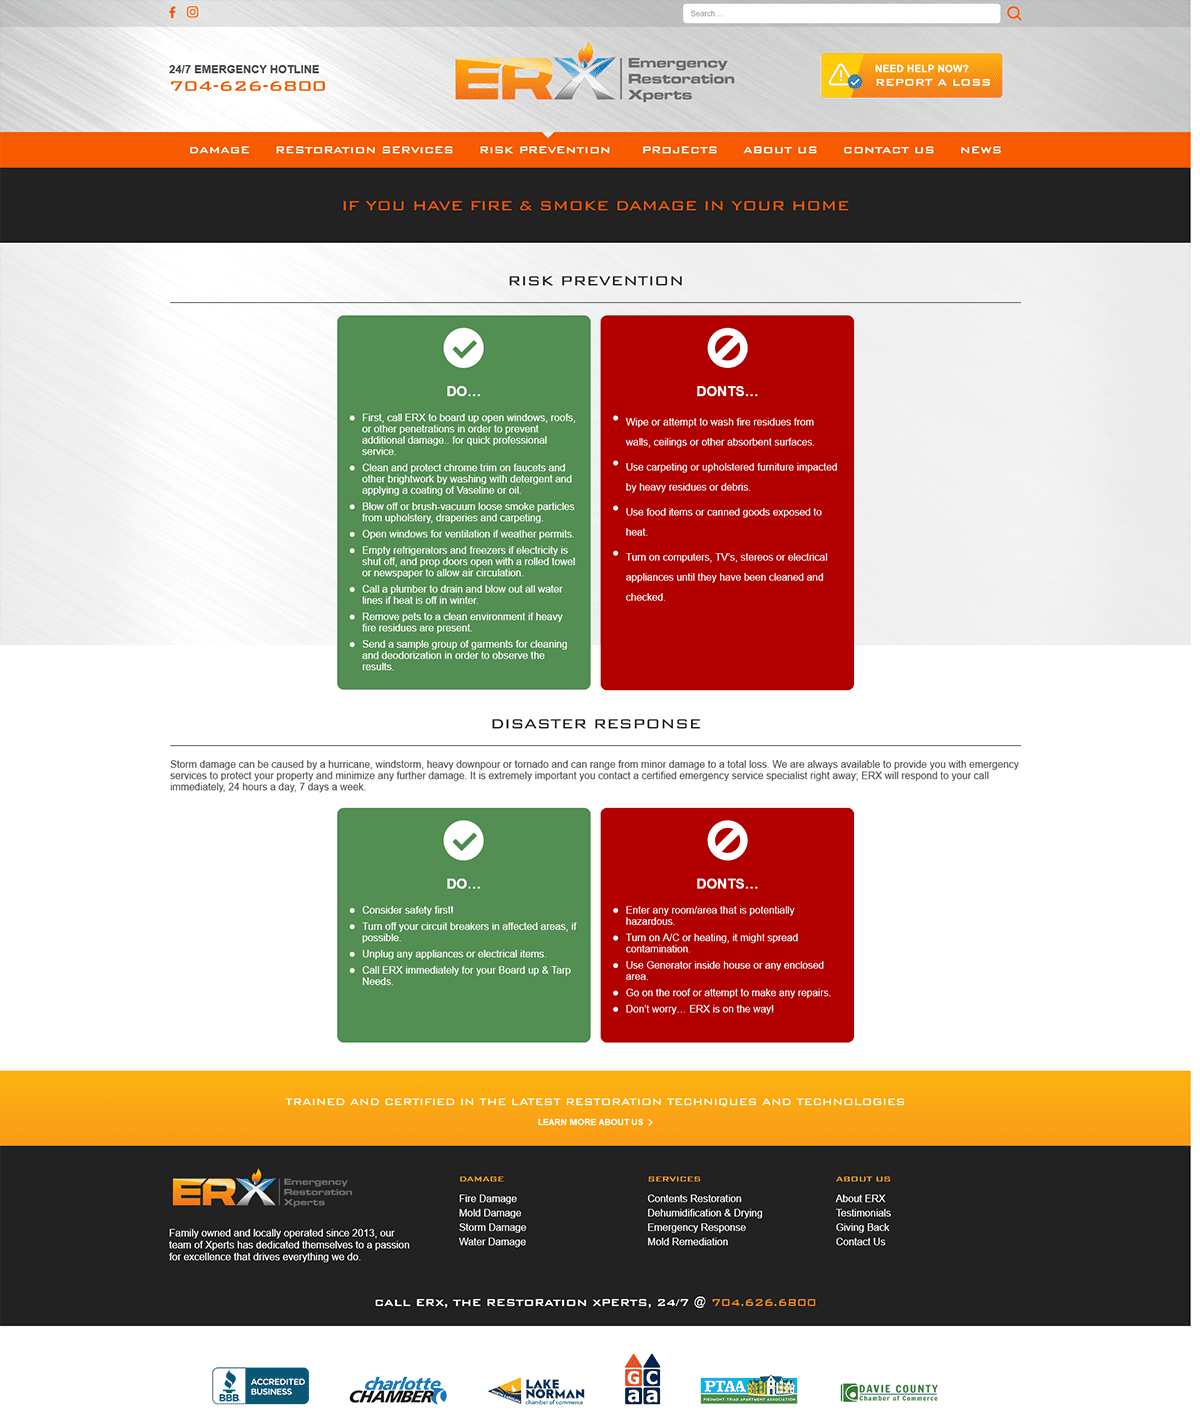 Emergency Restoration Xperts website risk prevention page screenshot